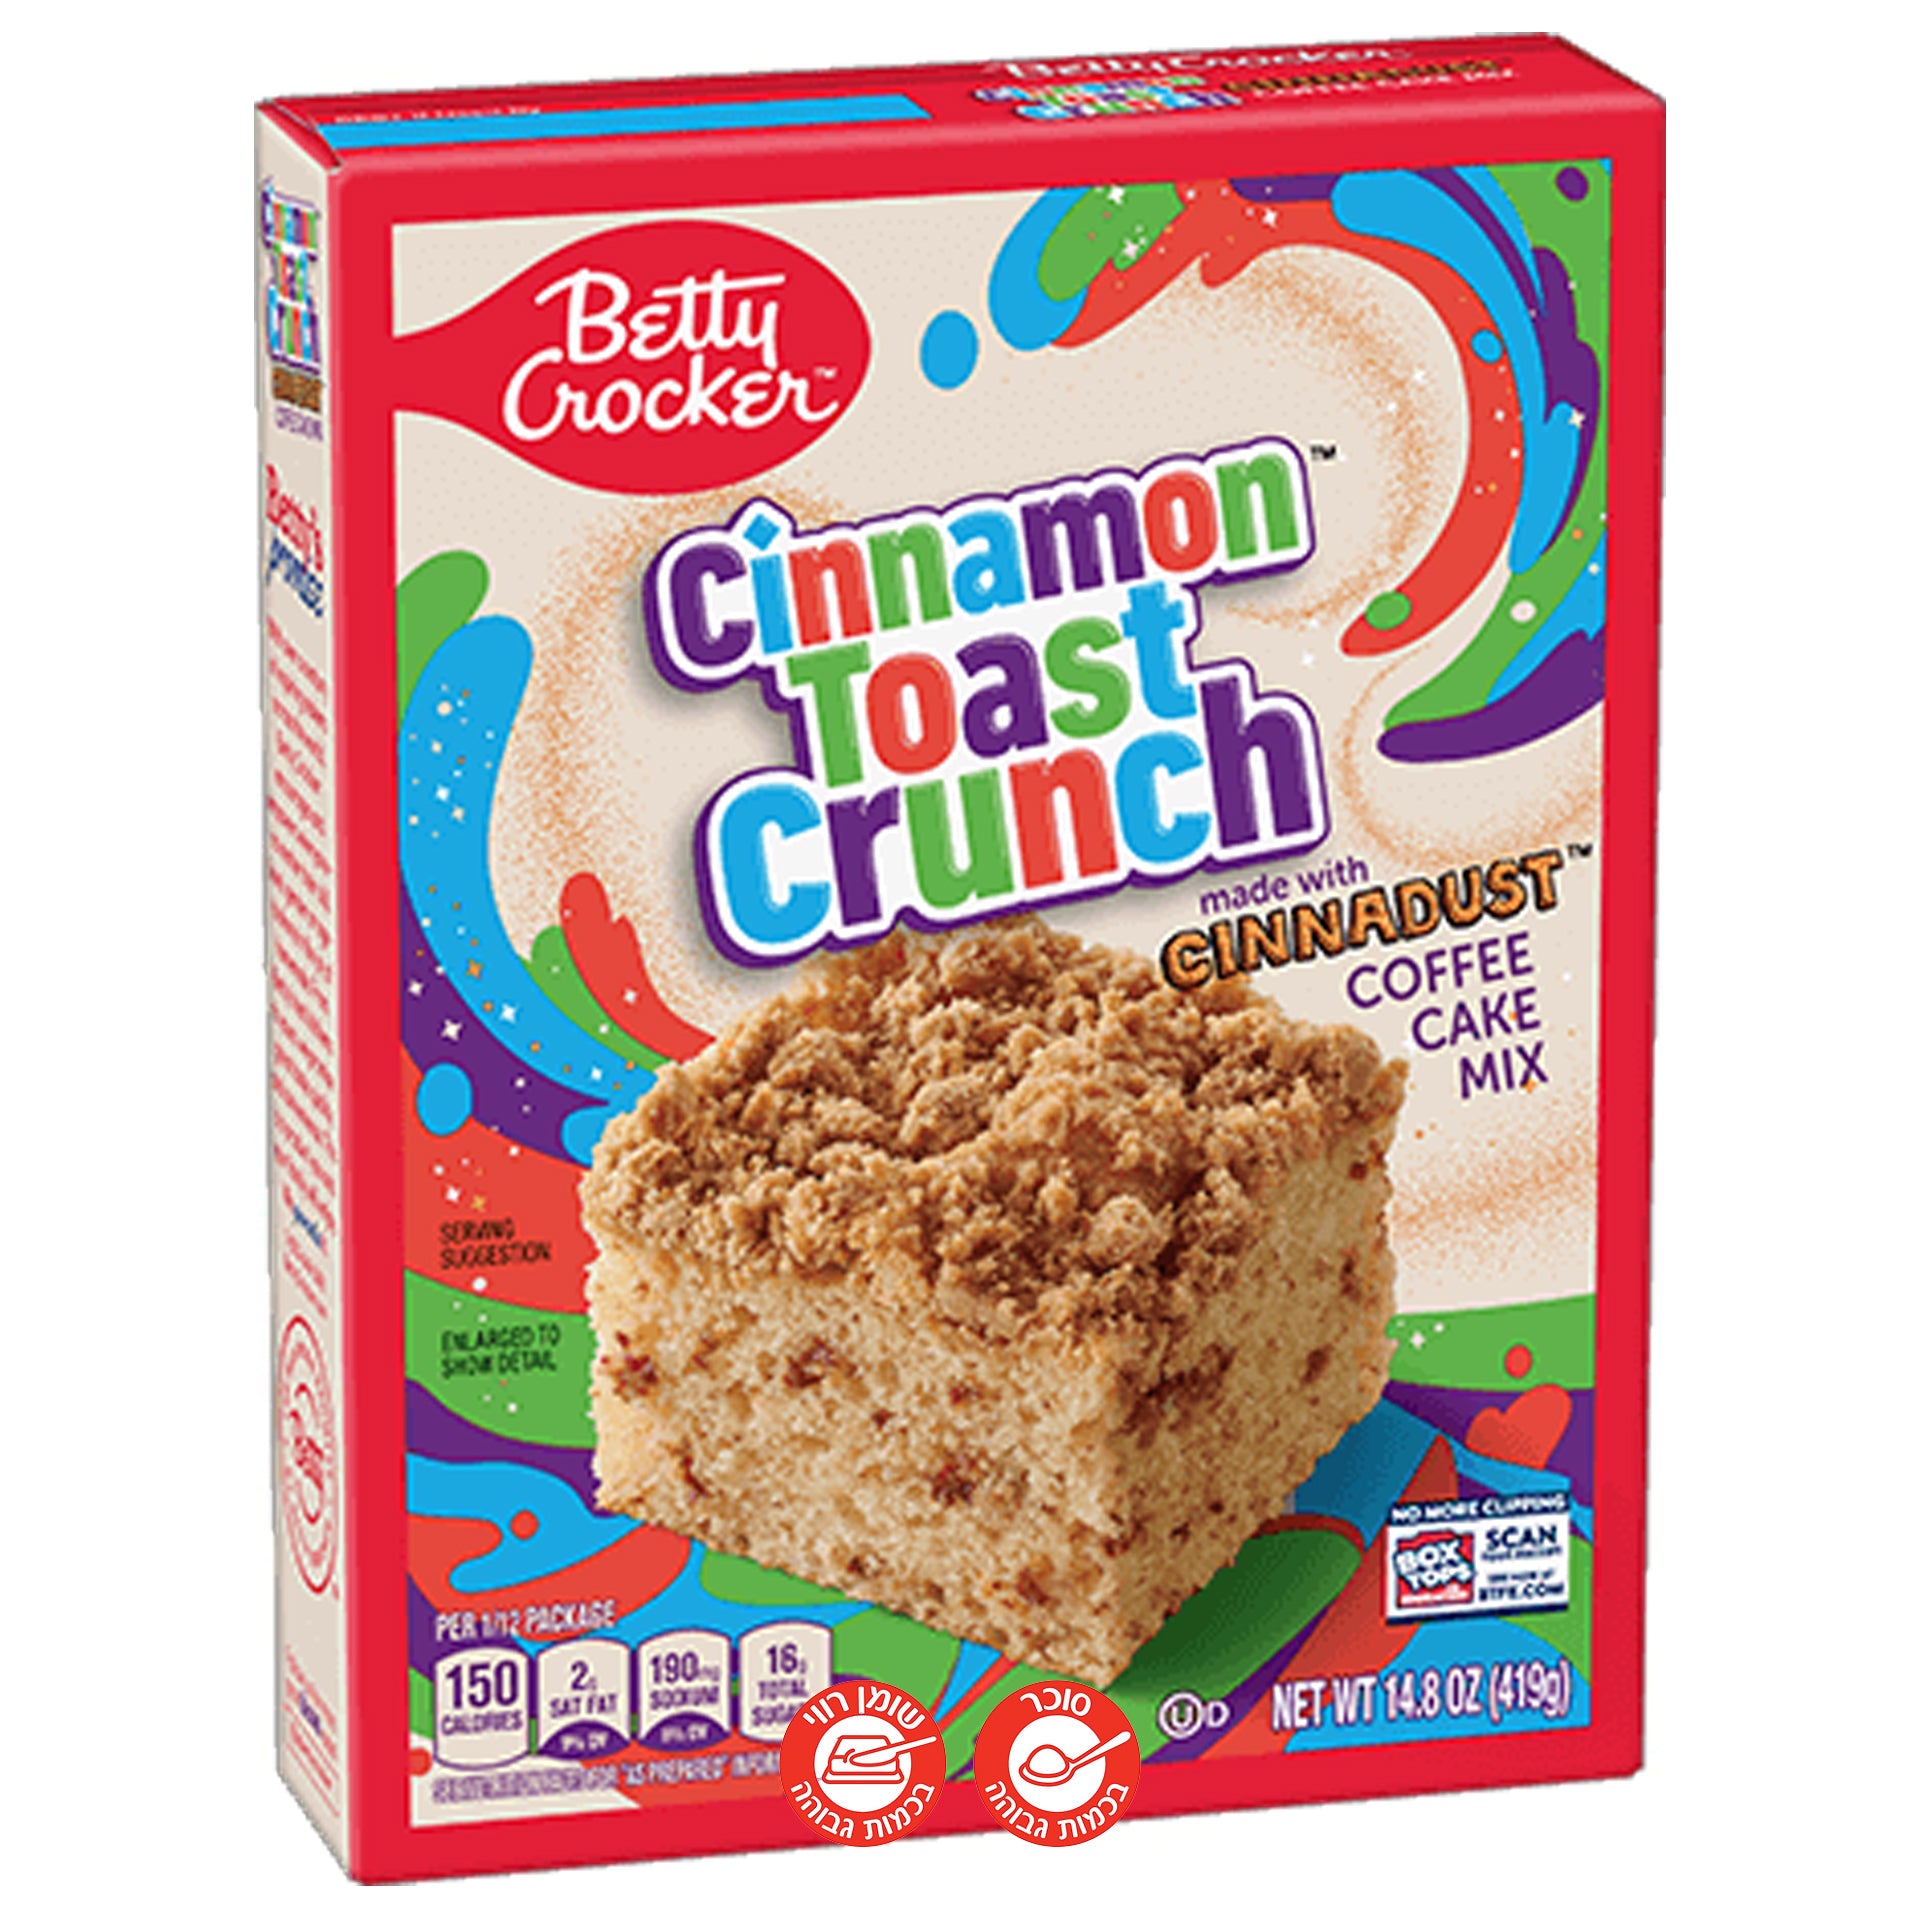 Betty Crocker Cinnamon Toast Crunch Coffee Mix Cake תערובת עוגת קינמון קראנ'ץ עם אבקת קינמון